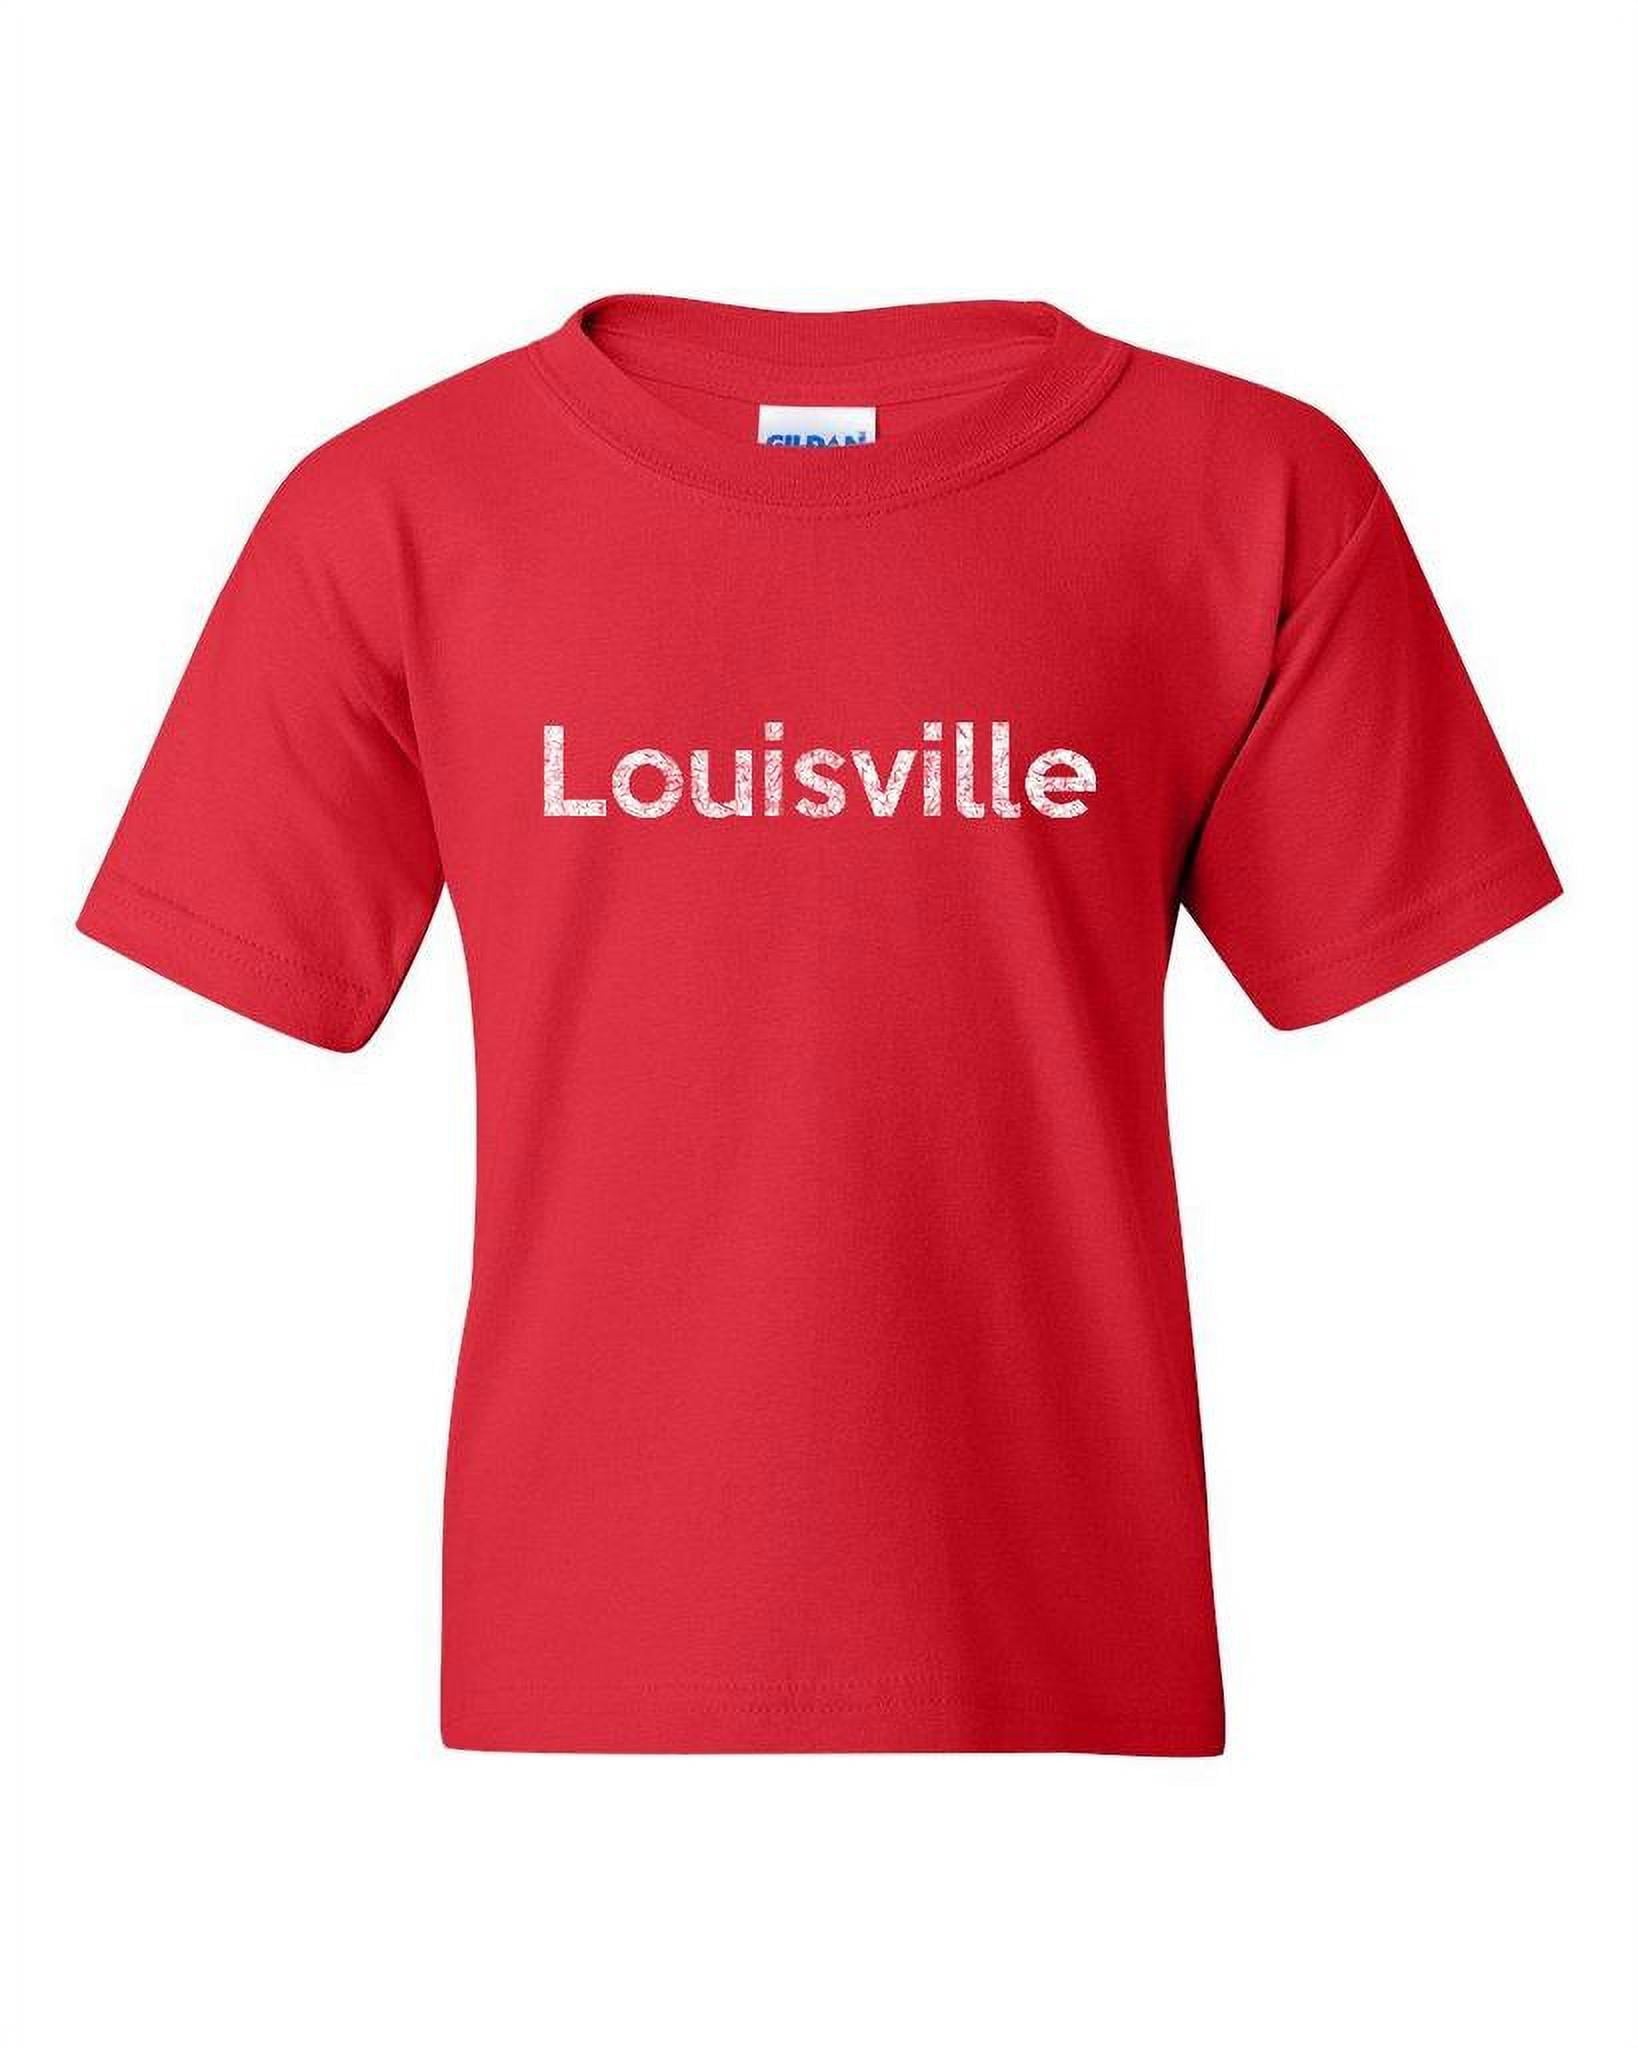 Artix Louisville Unisex Youth Kids T-Shirt